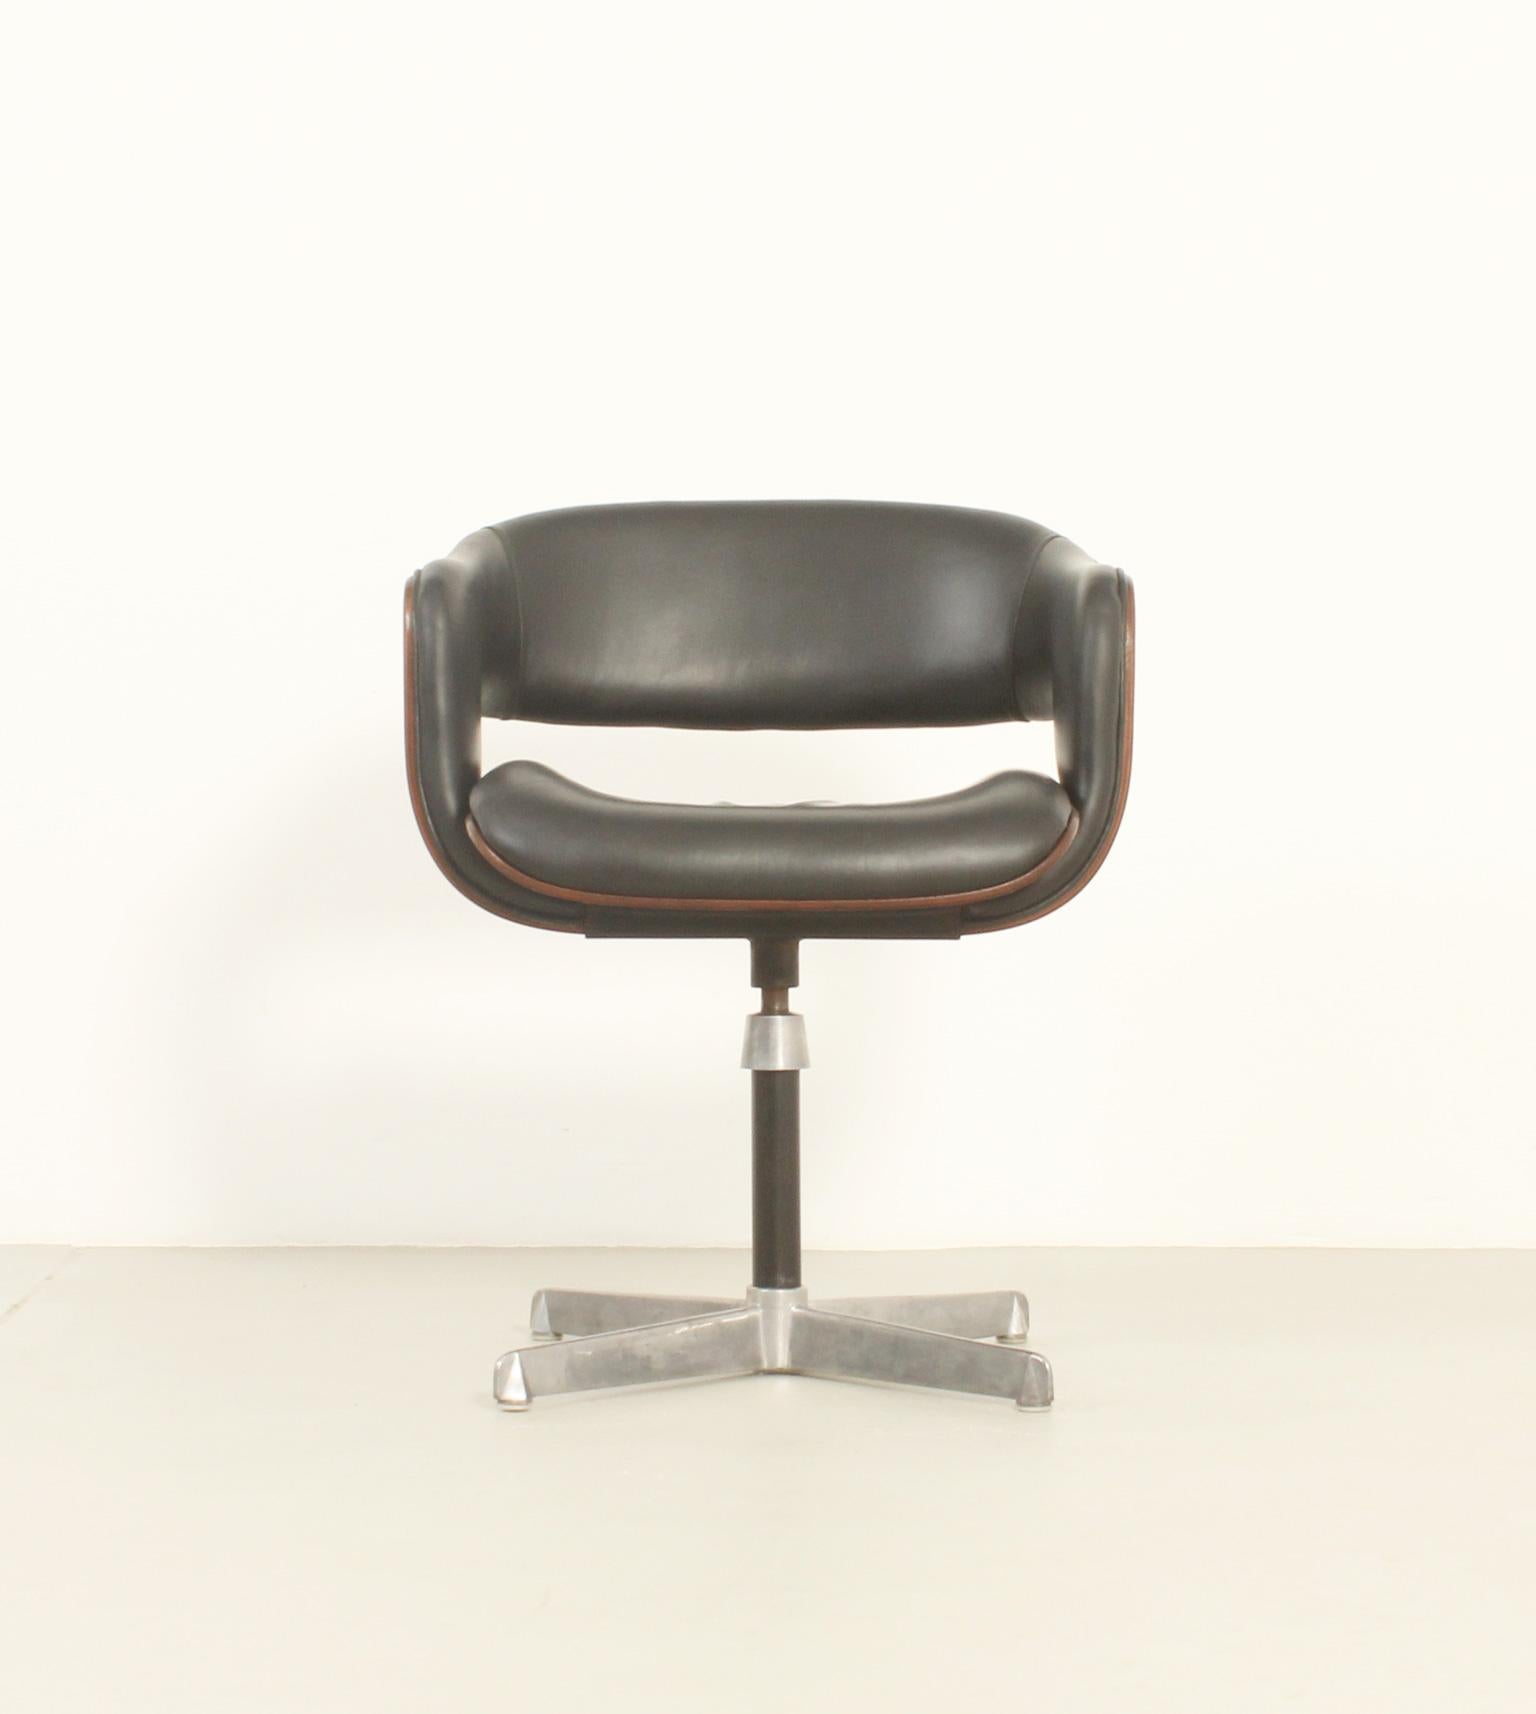 Italian Oxford Chair by British Designer Martin Grierson for Arflex, 1963